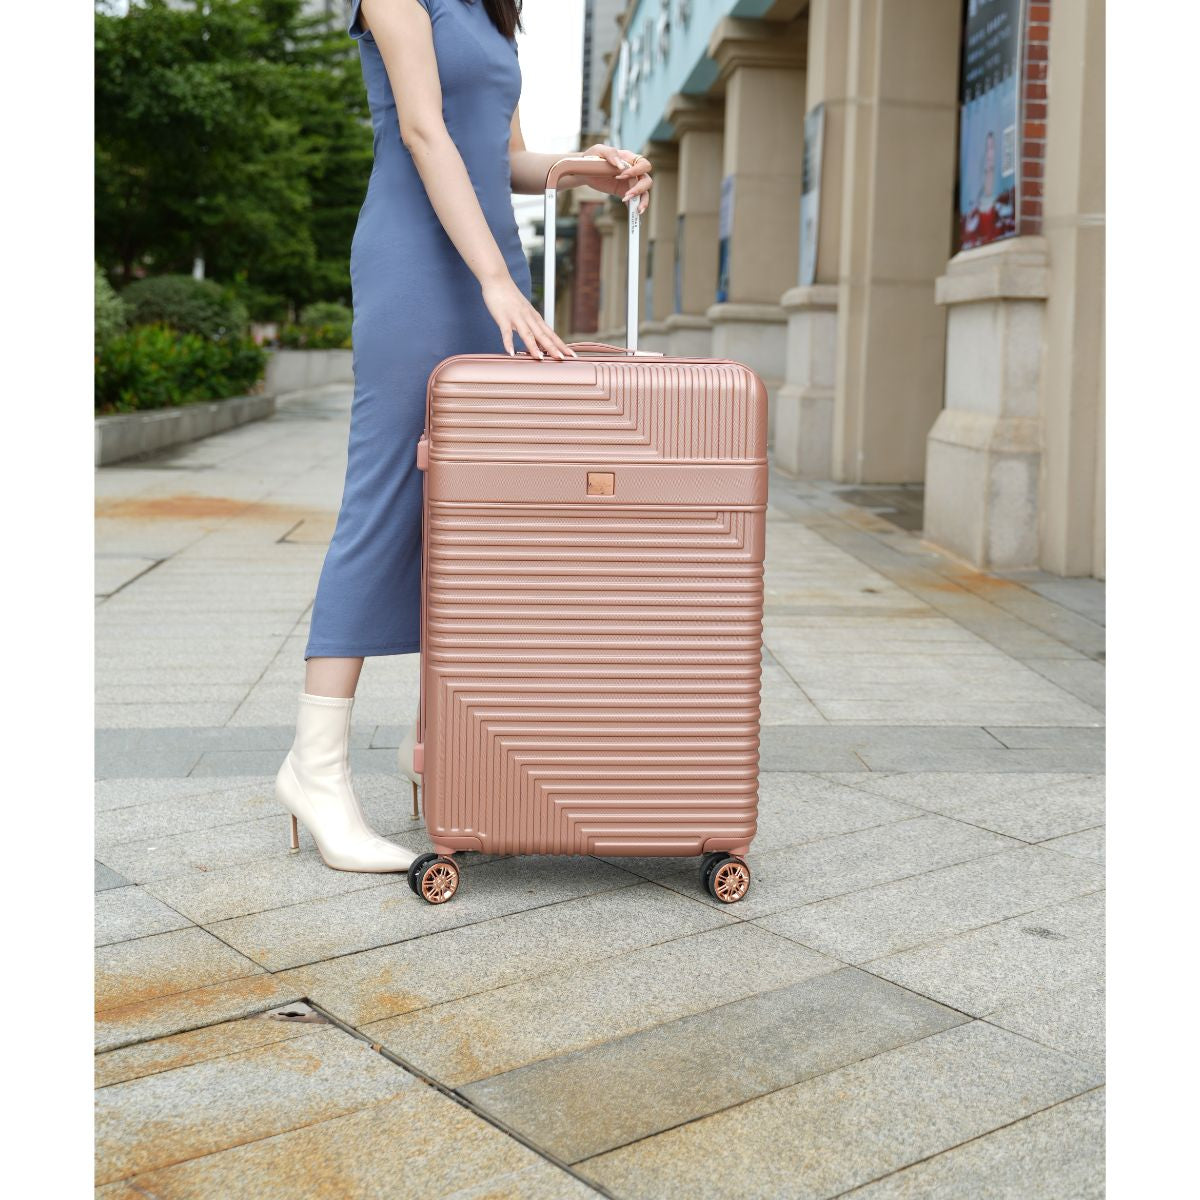 Mykonos Luggage Set-Extra Large and Large - 2 pieces